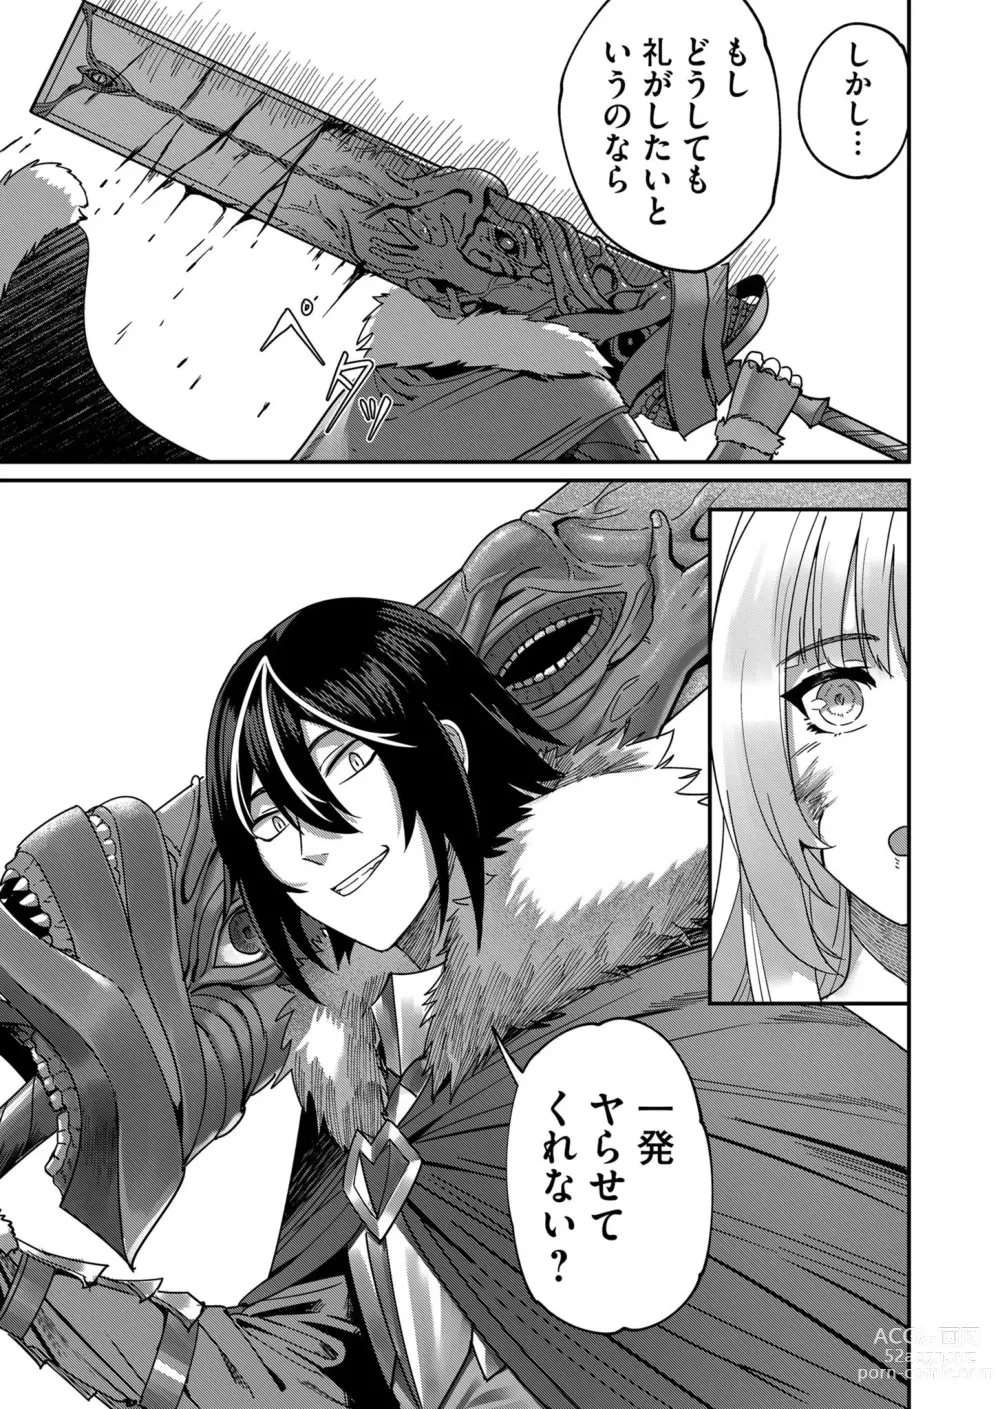 Page 7 of manga Kichiku Eiyuu Vol.01